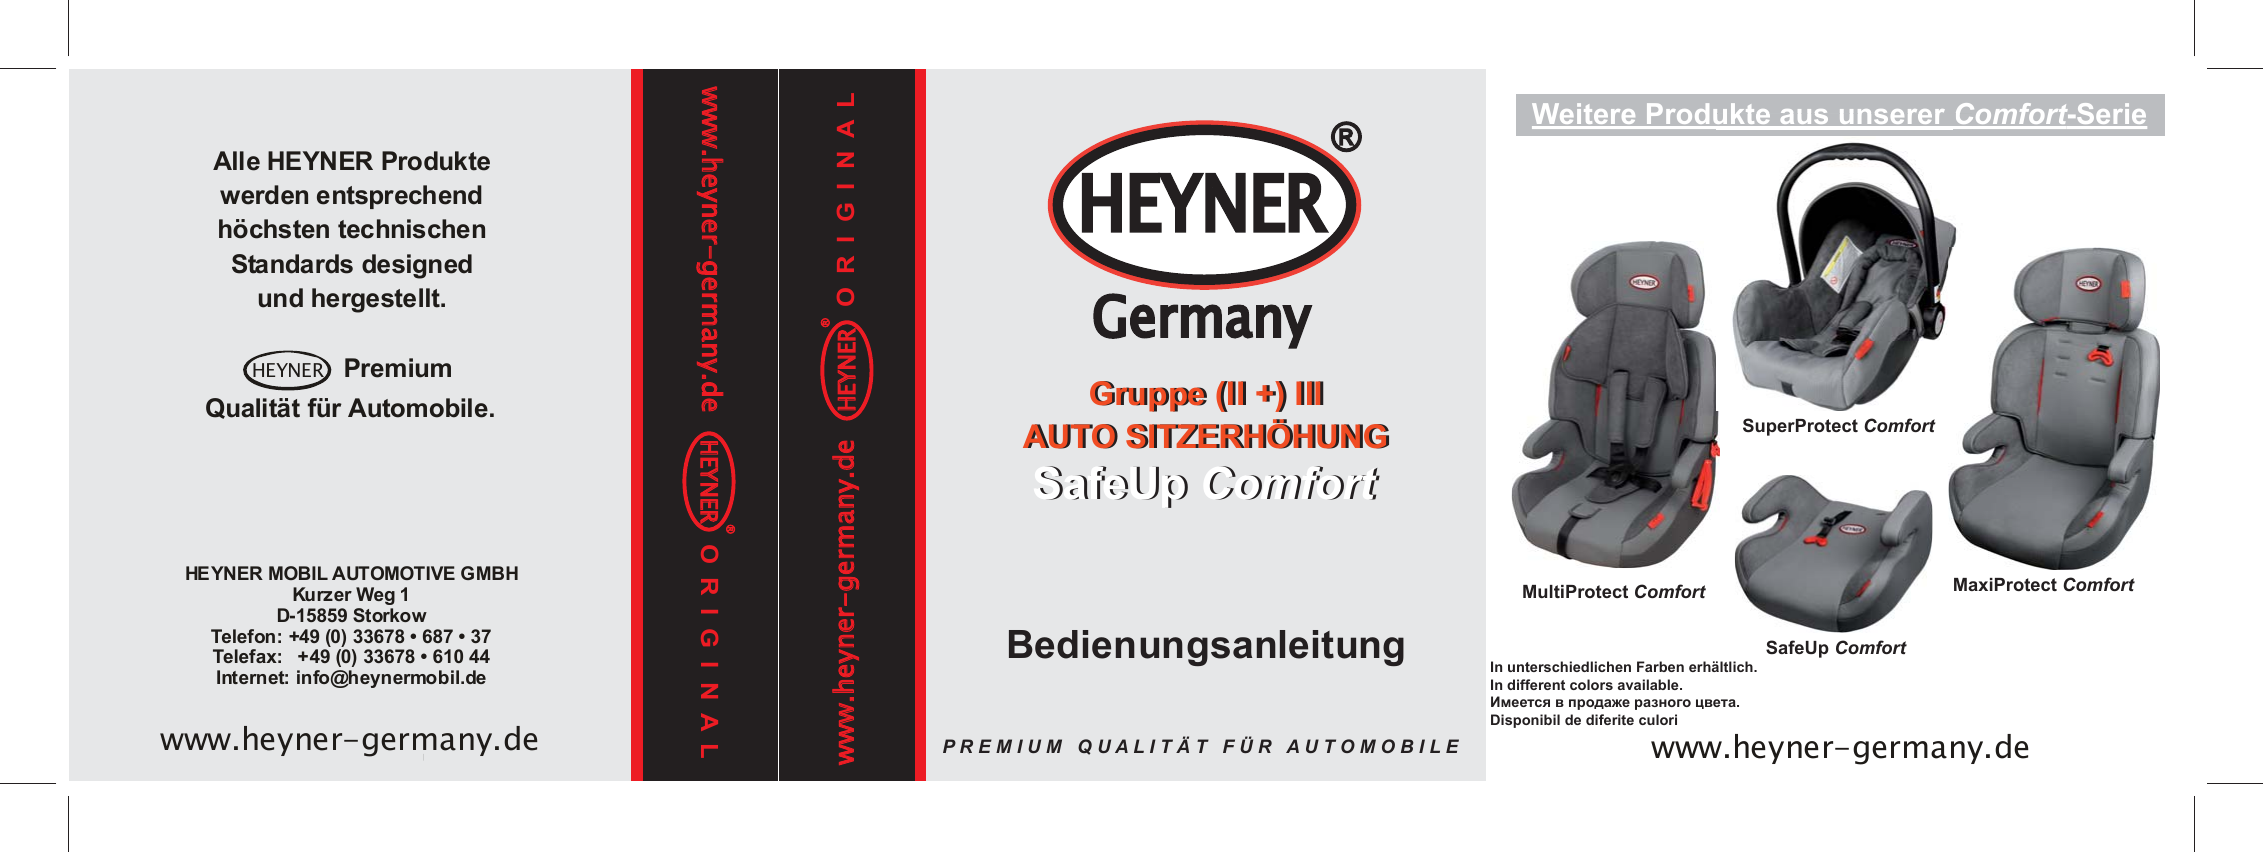 Автолюлька Heyner mobil Automotive GMBH